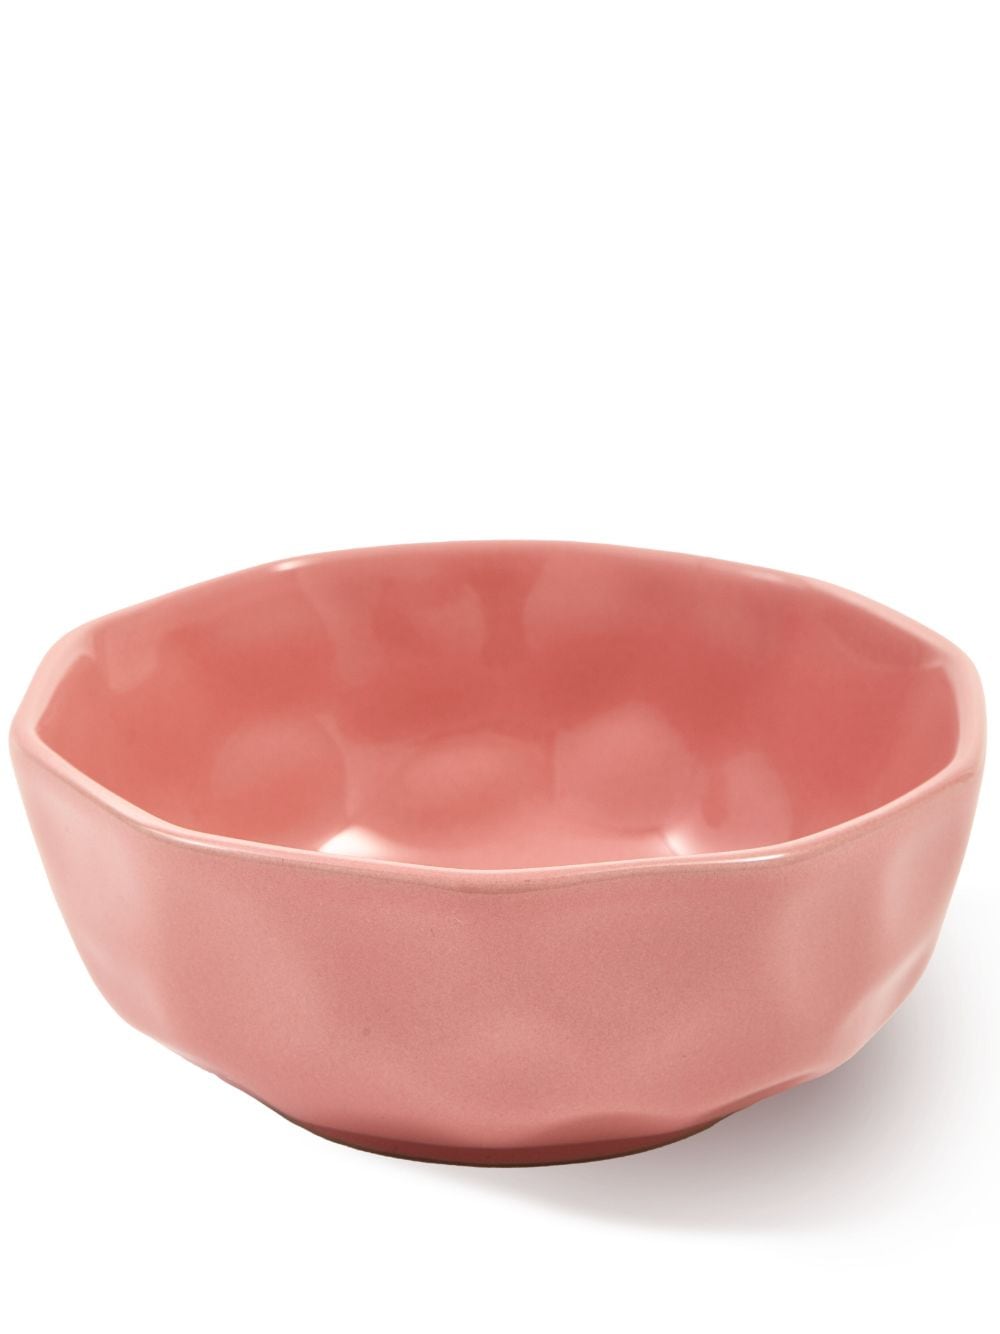 POLSPOTTEN Koa glazed-finish bowls (set of four) - Rosa